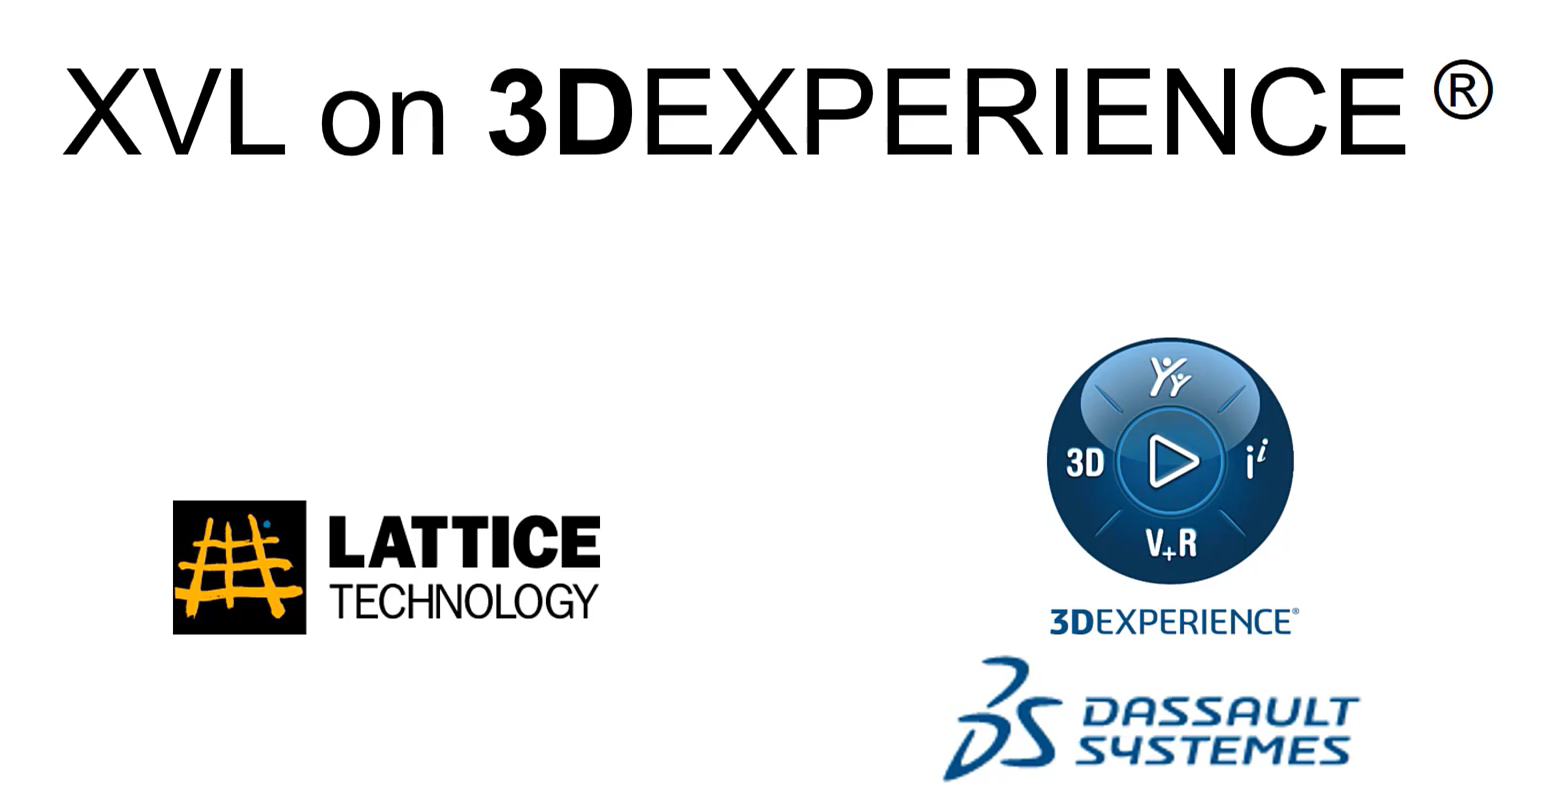 XVL on Dassaults 3DEXPERIENCE Platform